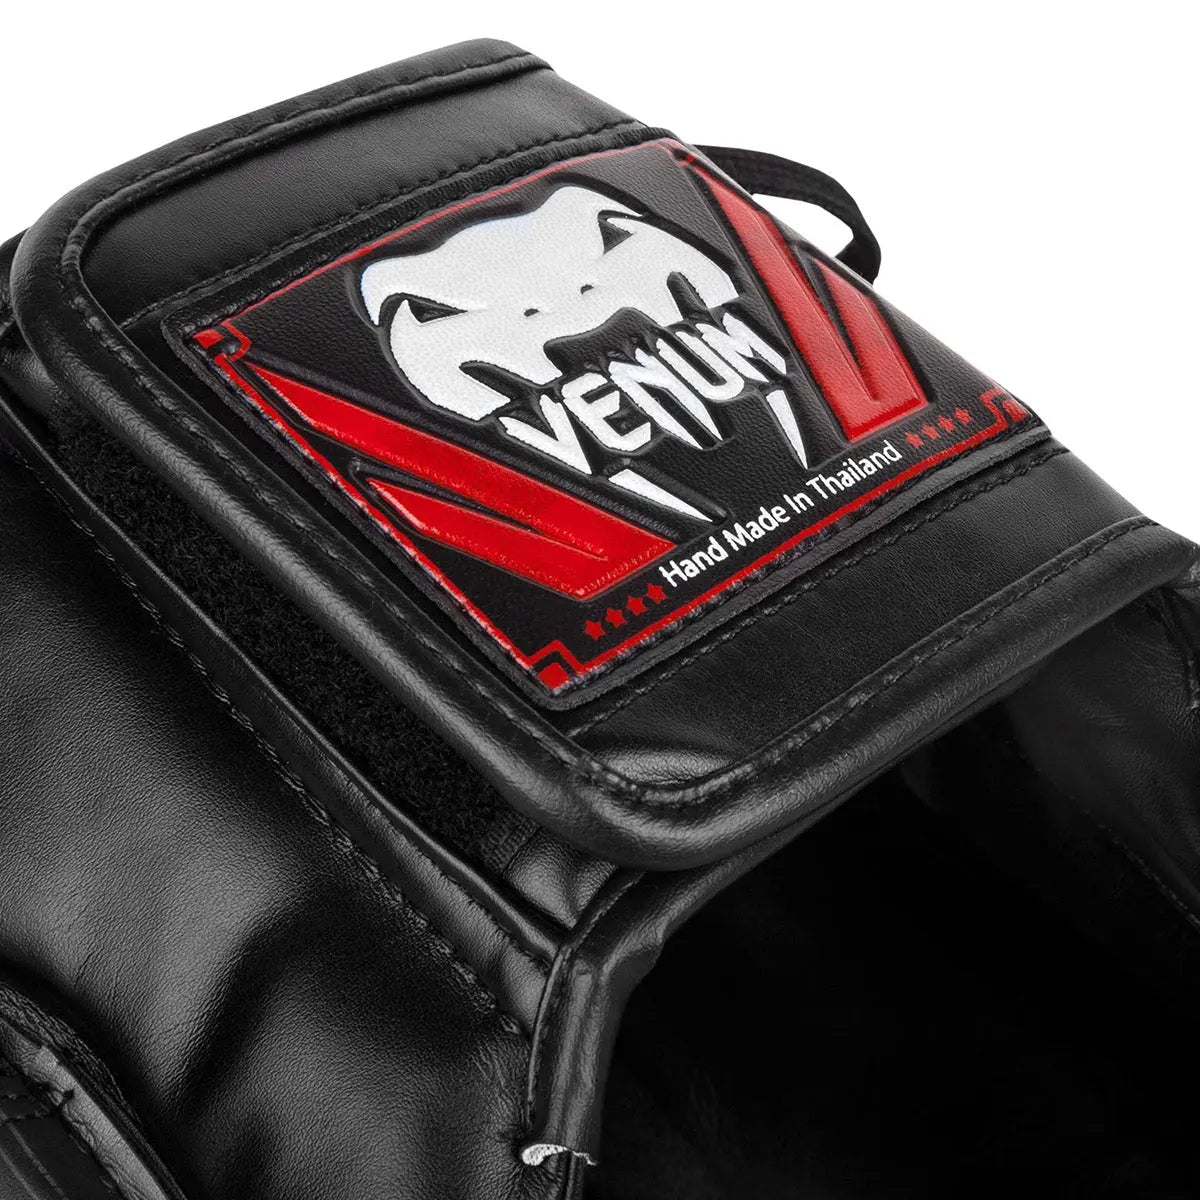 Venum Elite Iron Lightweight MMA Headgear Venum